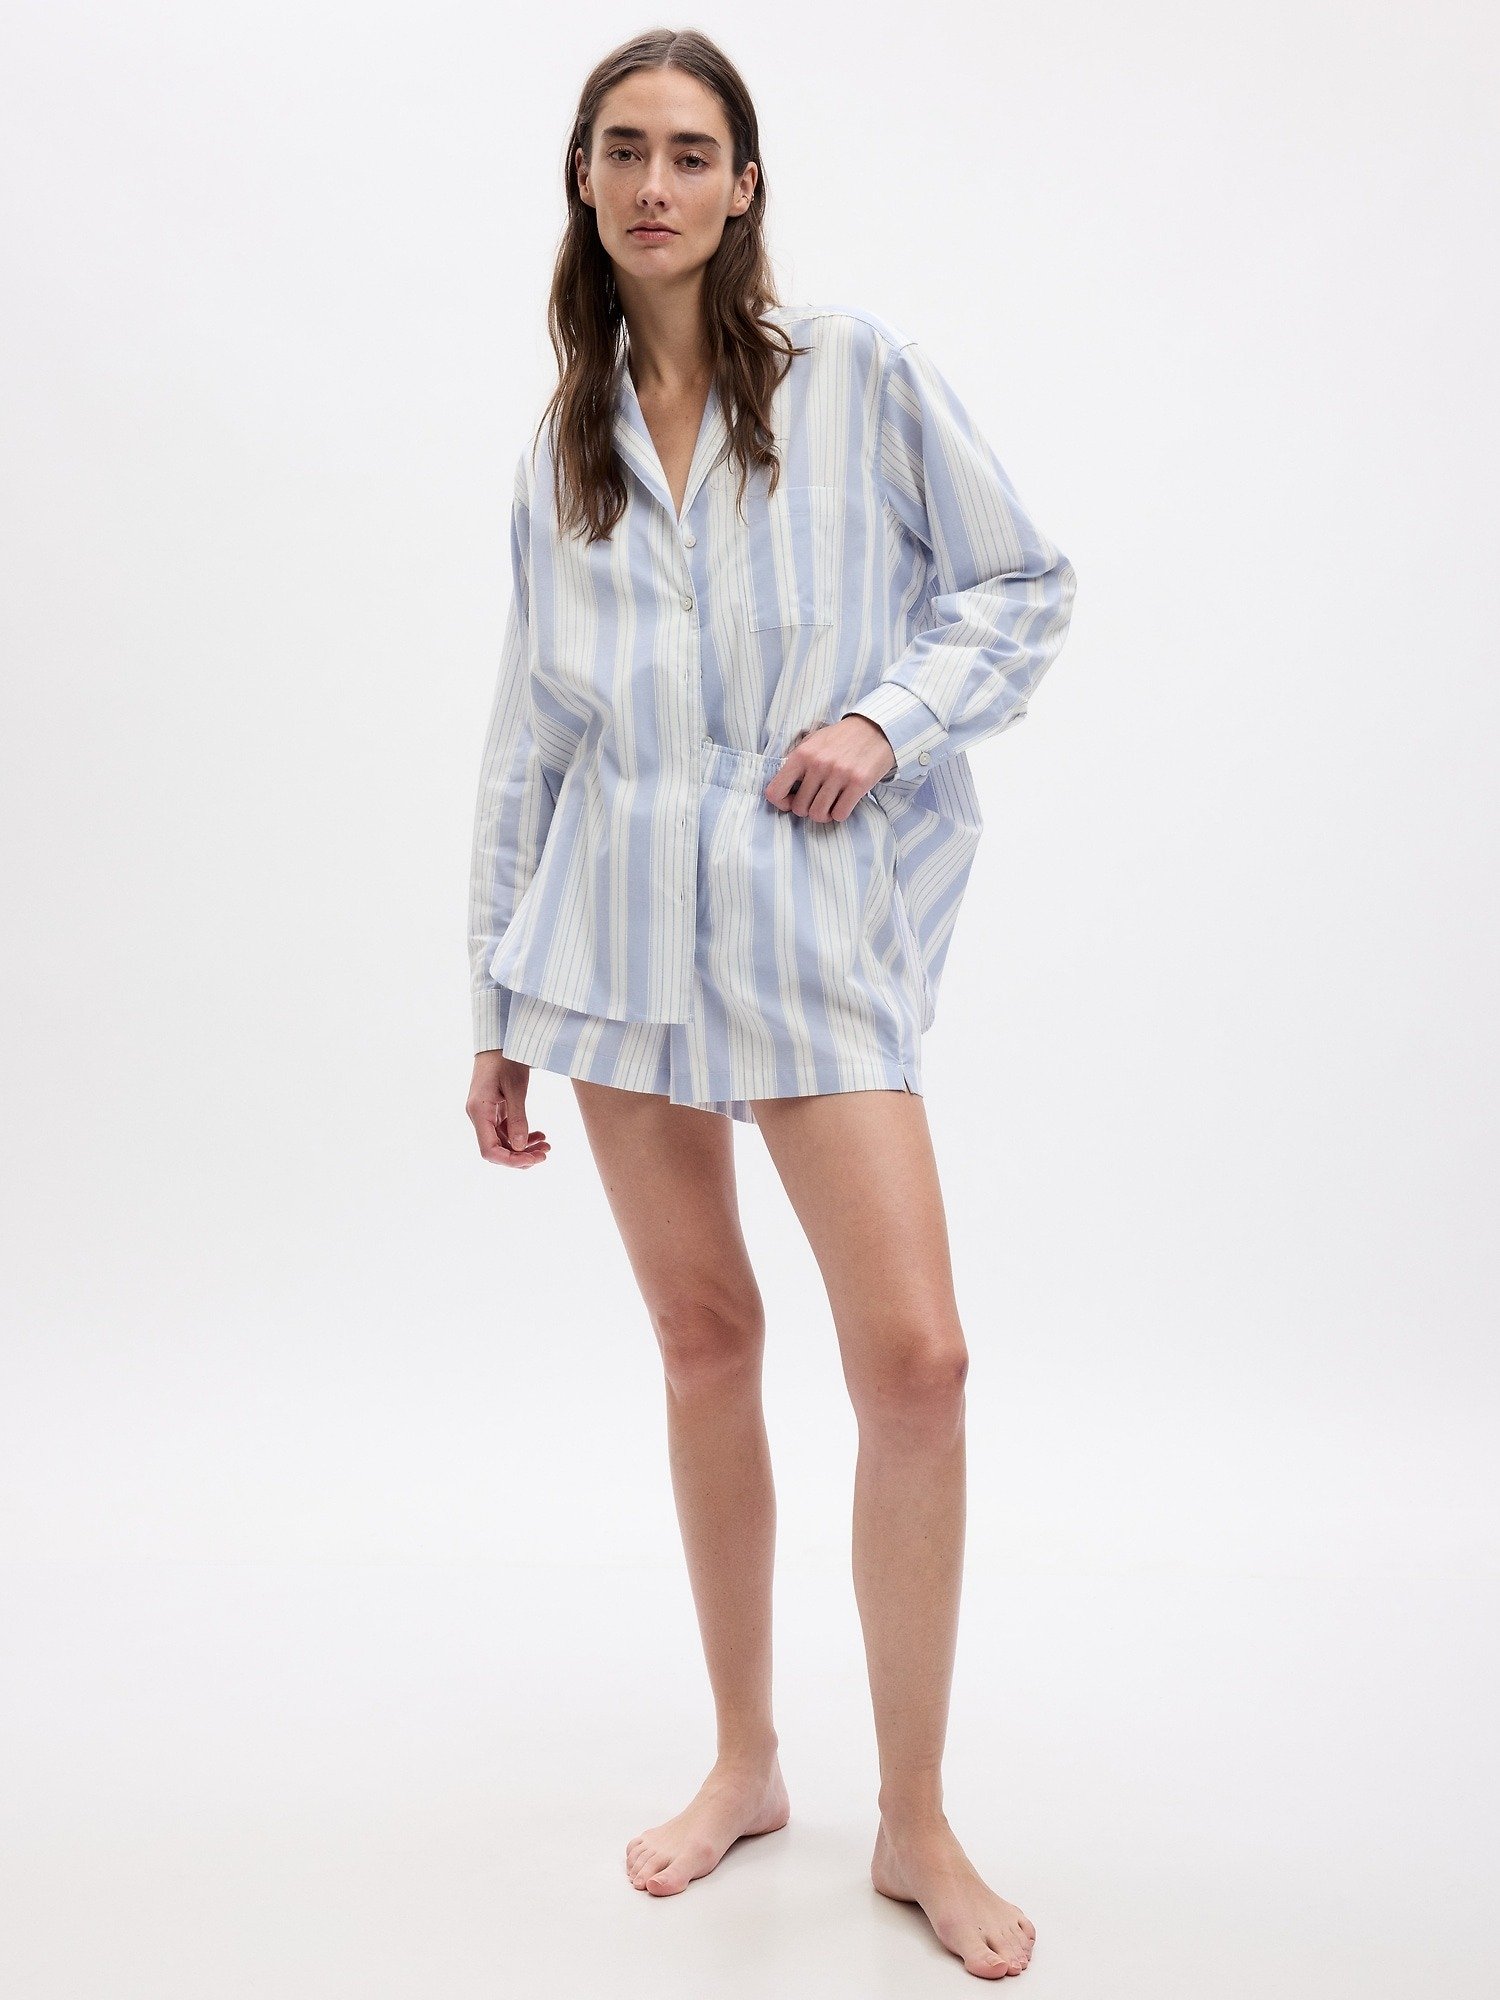 Poplin Pijama Altı product image